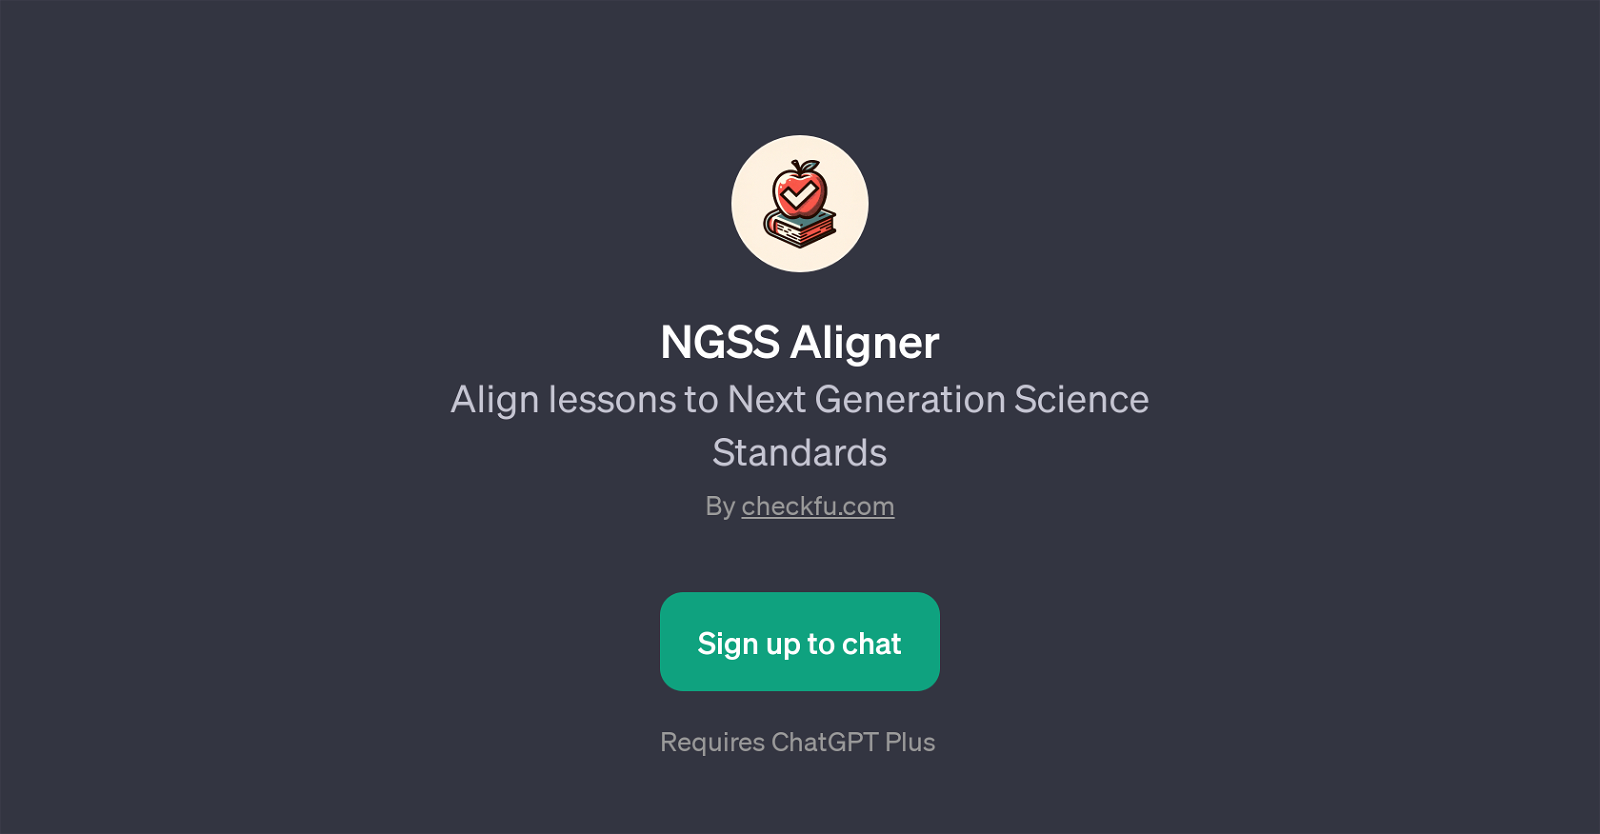 NGSS Aligner website